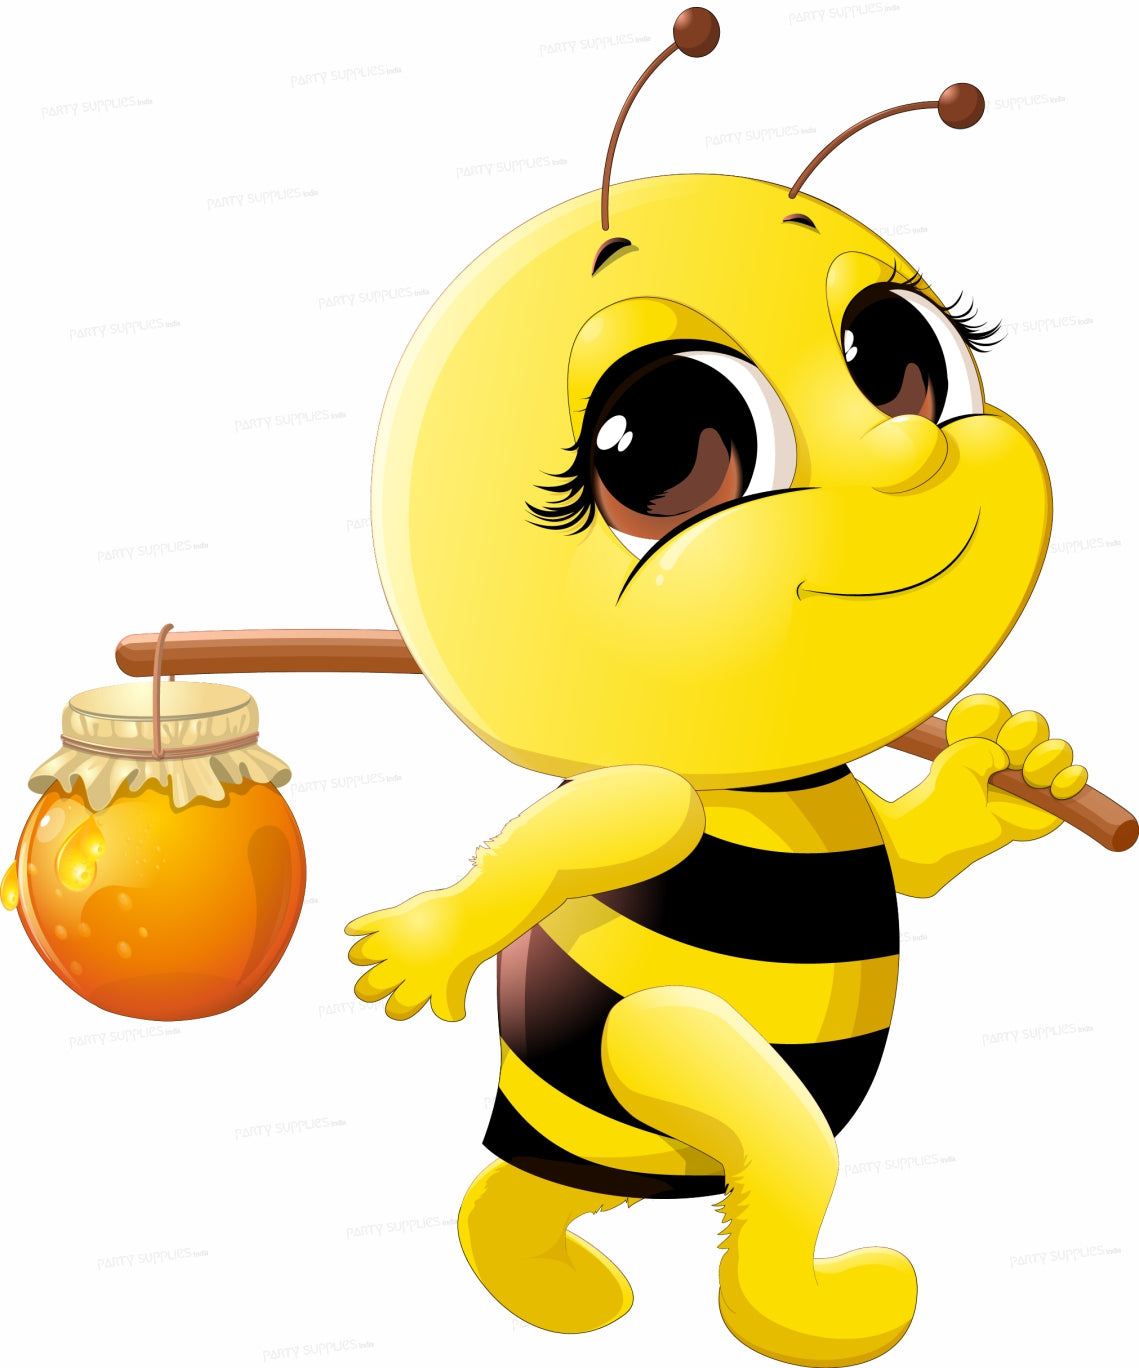 PSI Bumble Bee Theme Cutout - 06